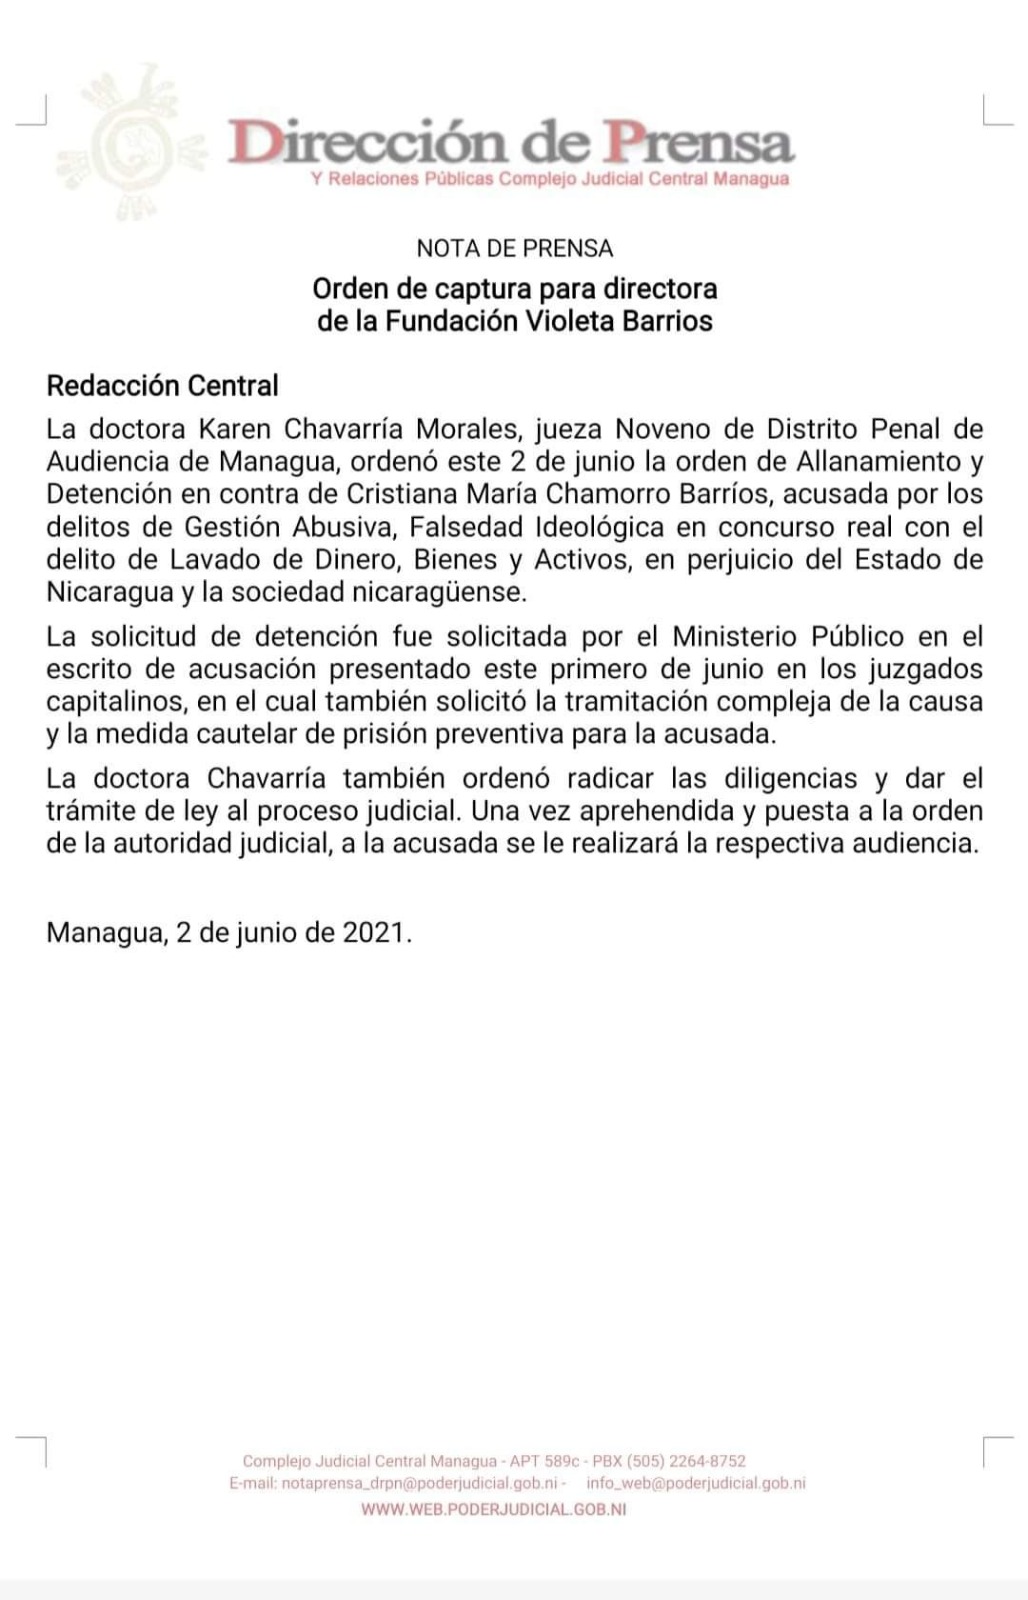 Comunicado sobre la detención de Cristiana Chamorro en Nicaragua (Infobae)